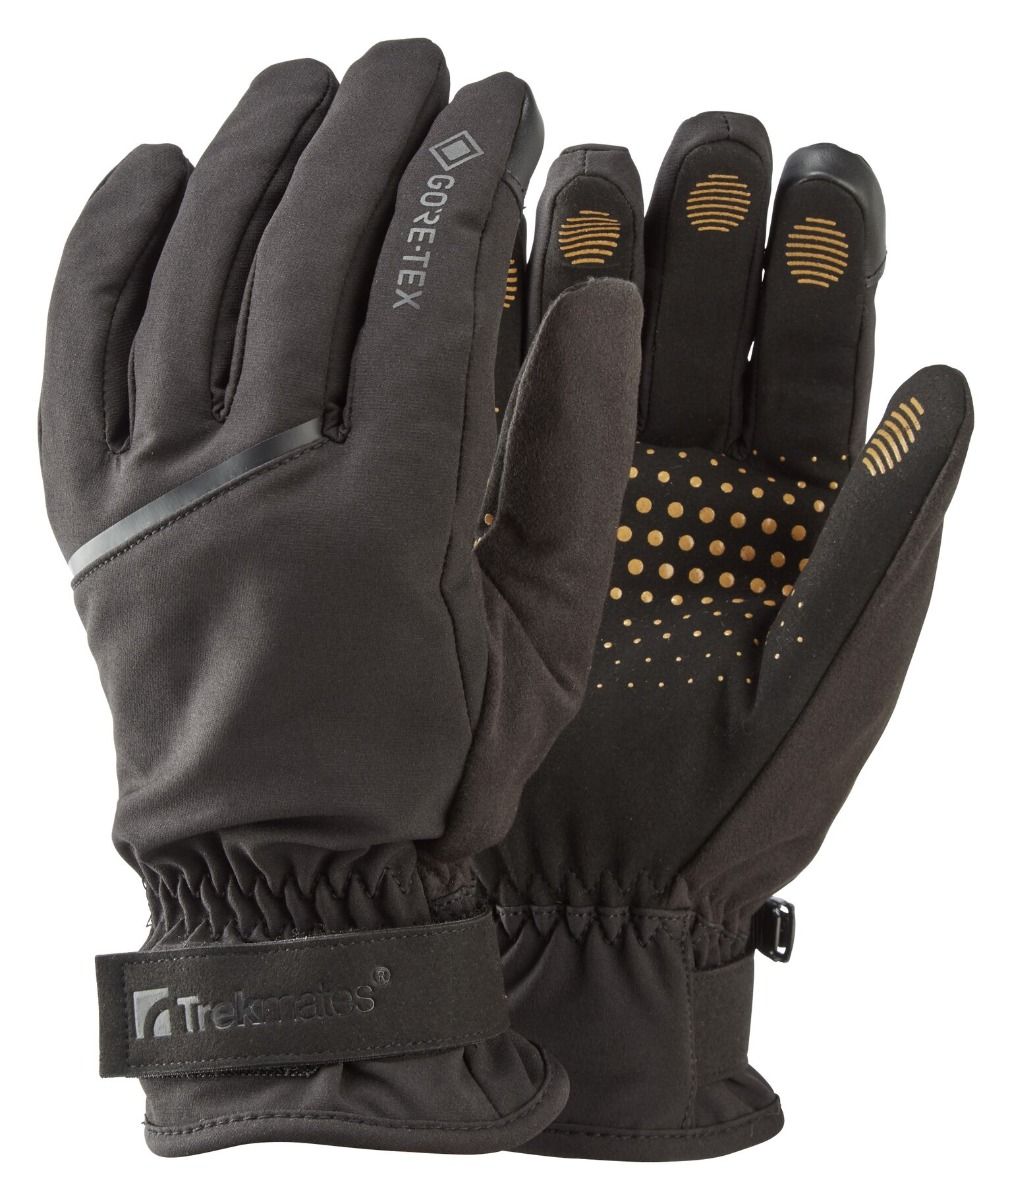 Перчатки Trekmates Friktion Gore Tex Grip Glove TM 004543 Black, размер S, черные